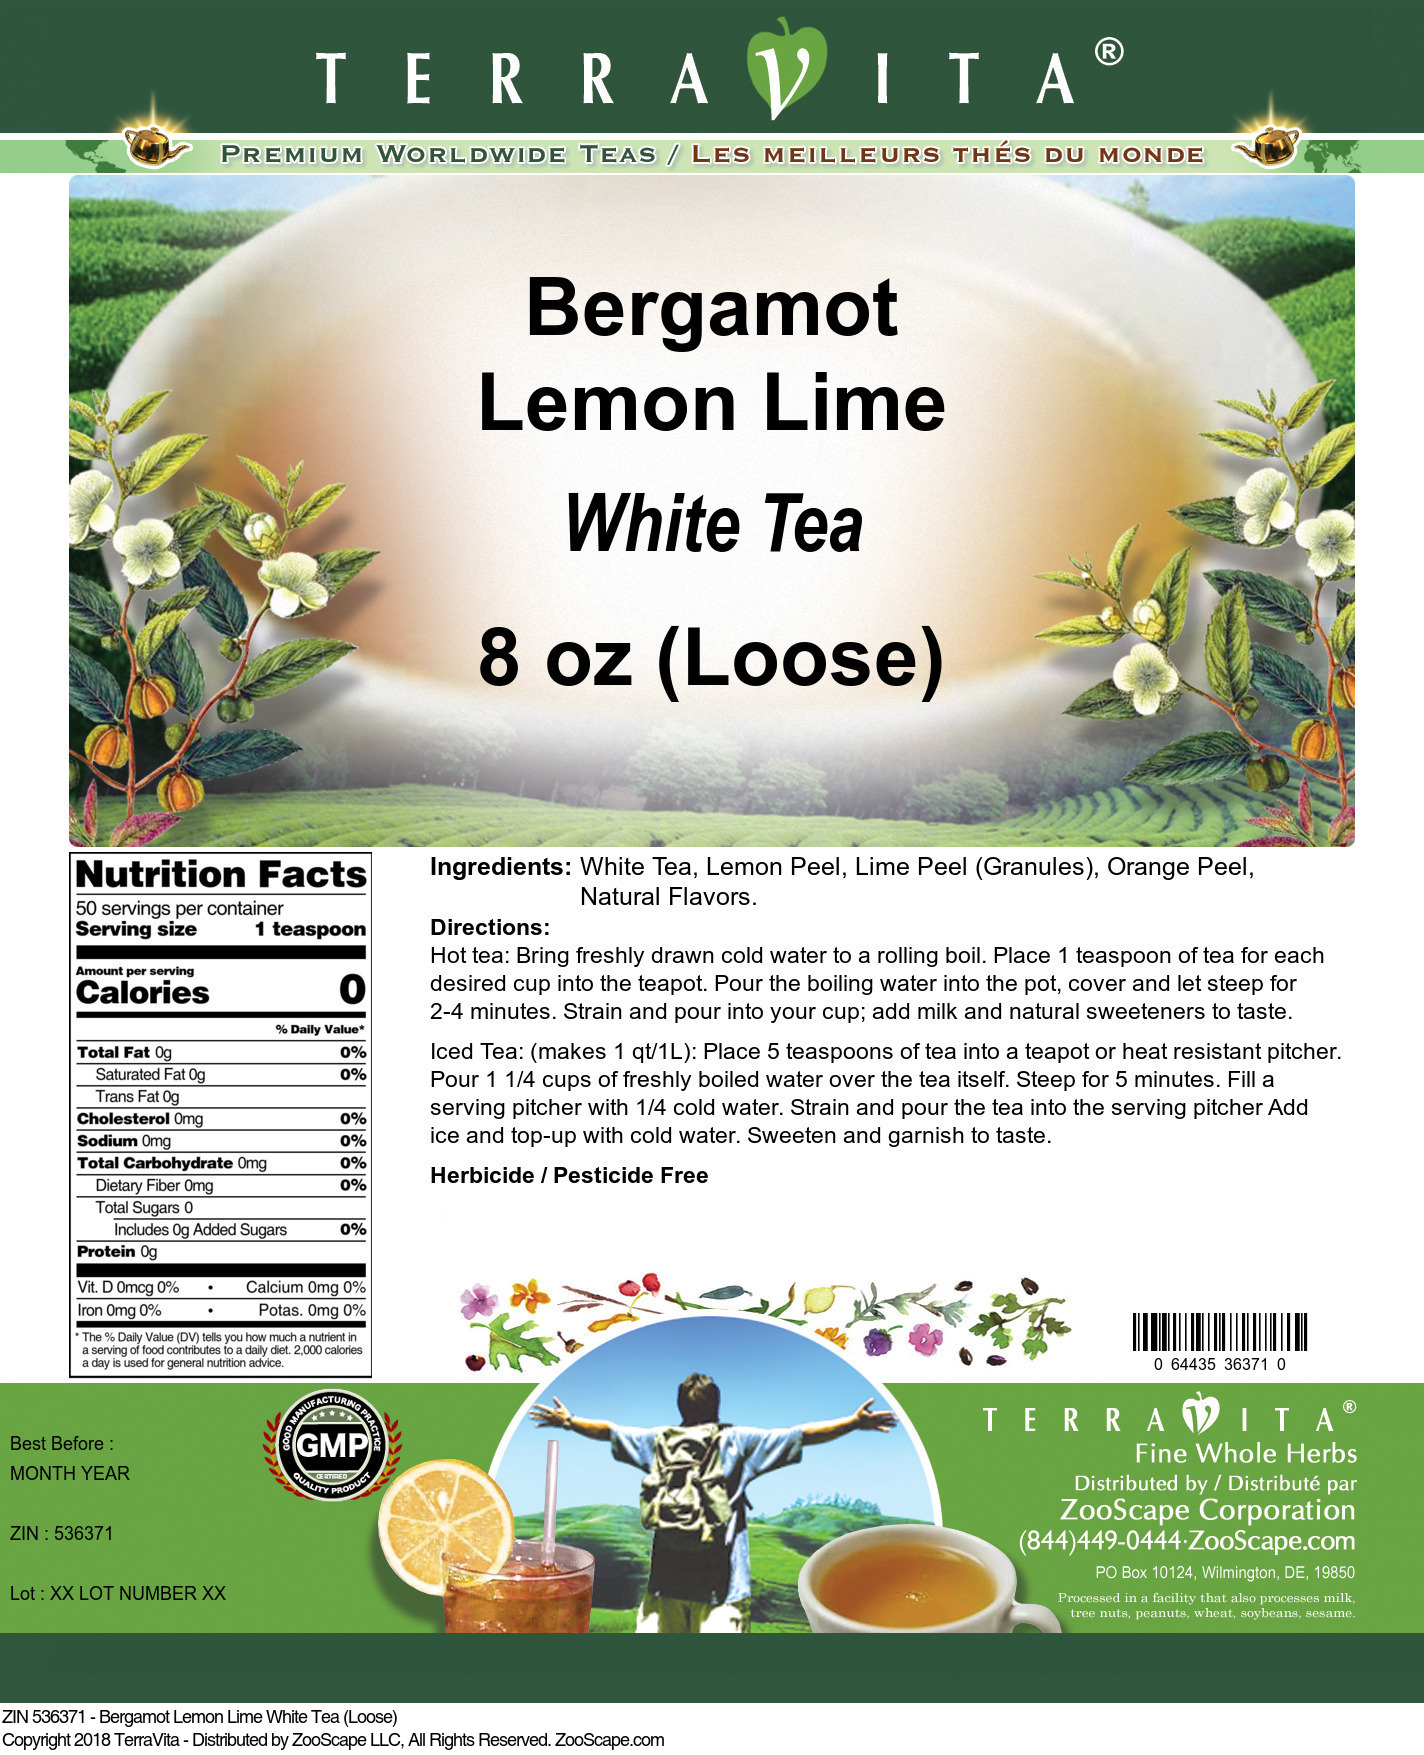 Bergamot Lemon Lime White Tea (Loose) - Label